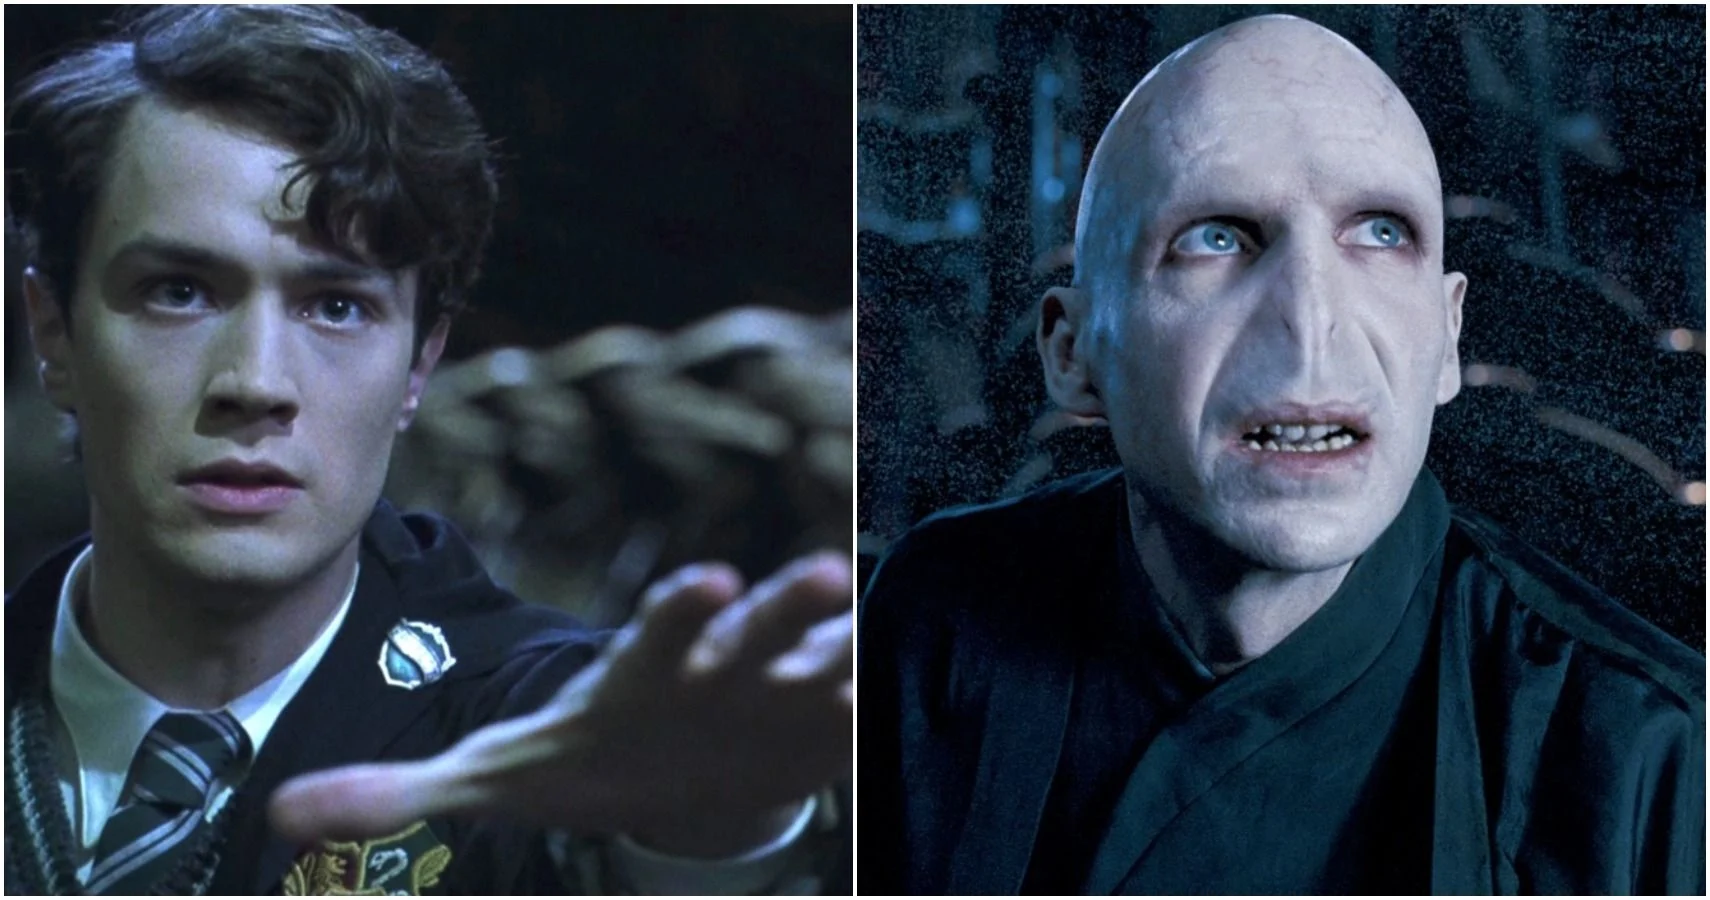 Voldemort Tom Riddle Feature - جان‌پیچ‌ها، دیوانه‌سازها و اشباح؛ مفهوم روح در مجموعه‌ی هری پاتر (تحلیل فلسفی هری پاتر)